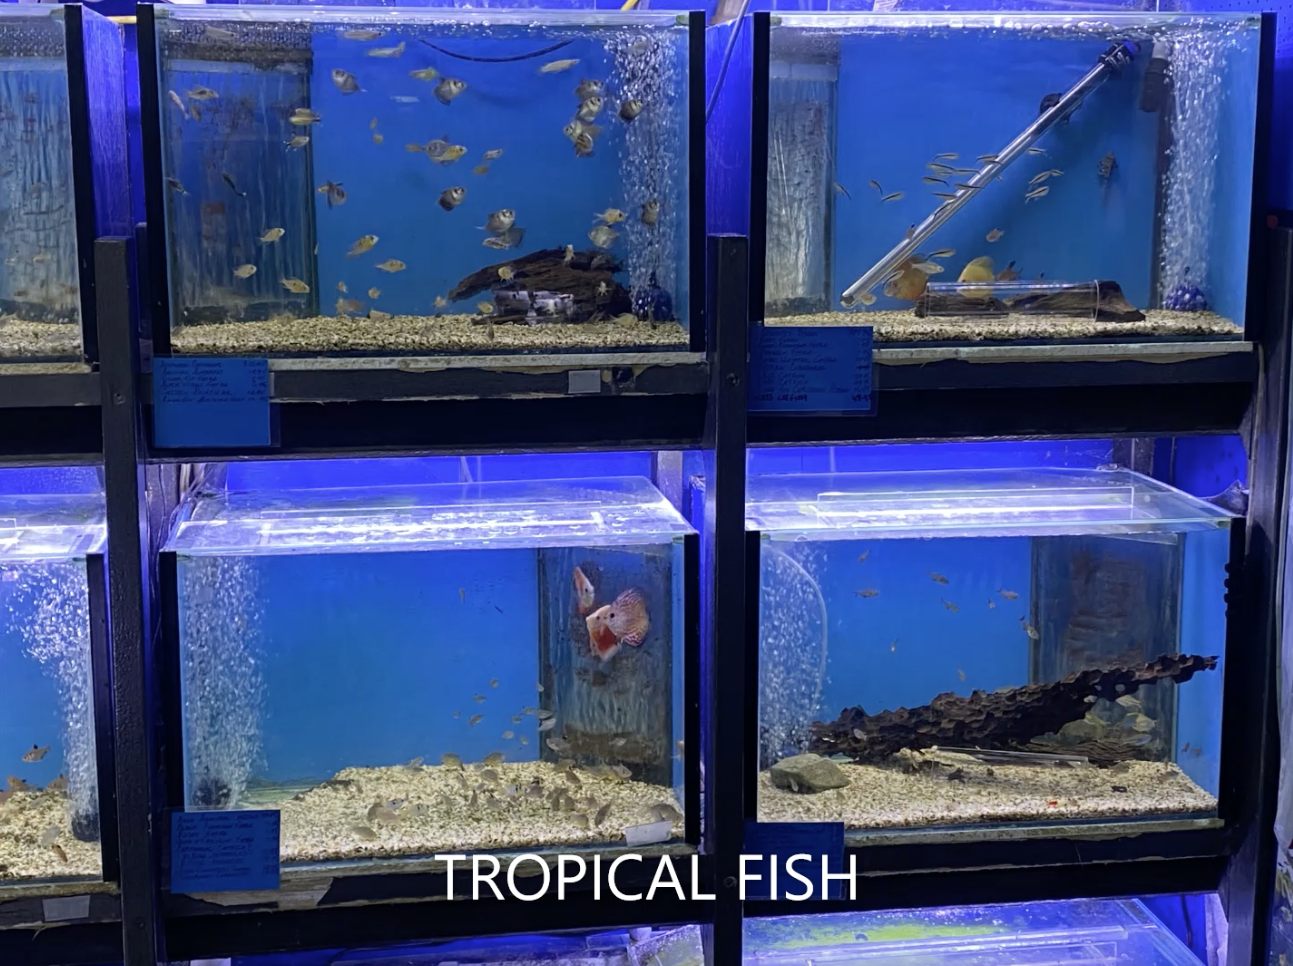 Tropical Fish in Display Tanks — Summerland Aquarium in Wollongbar, NSW